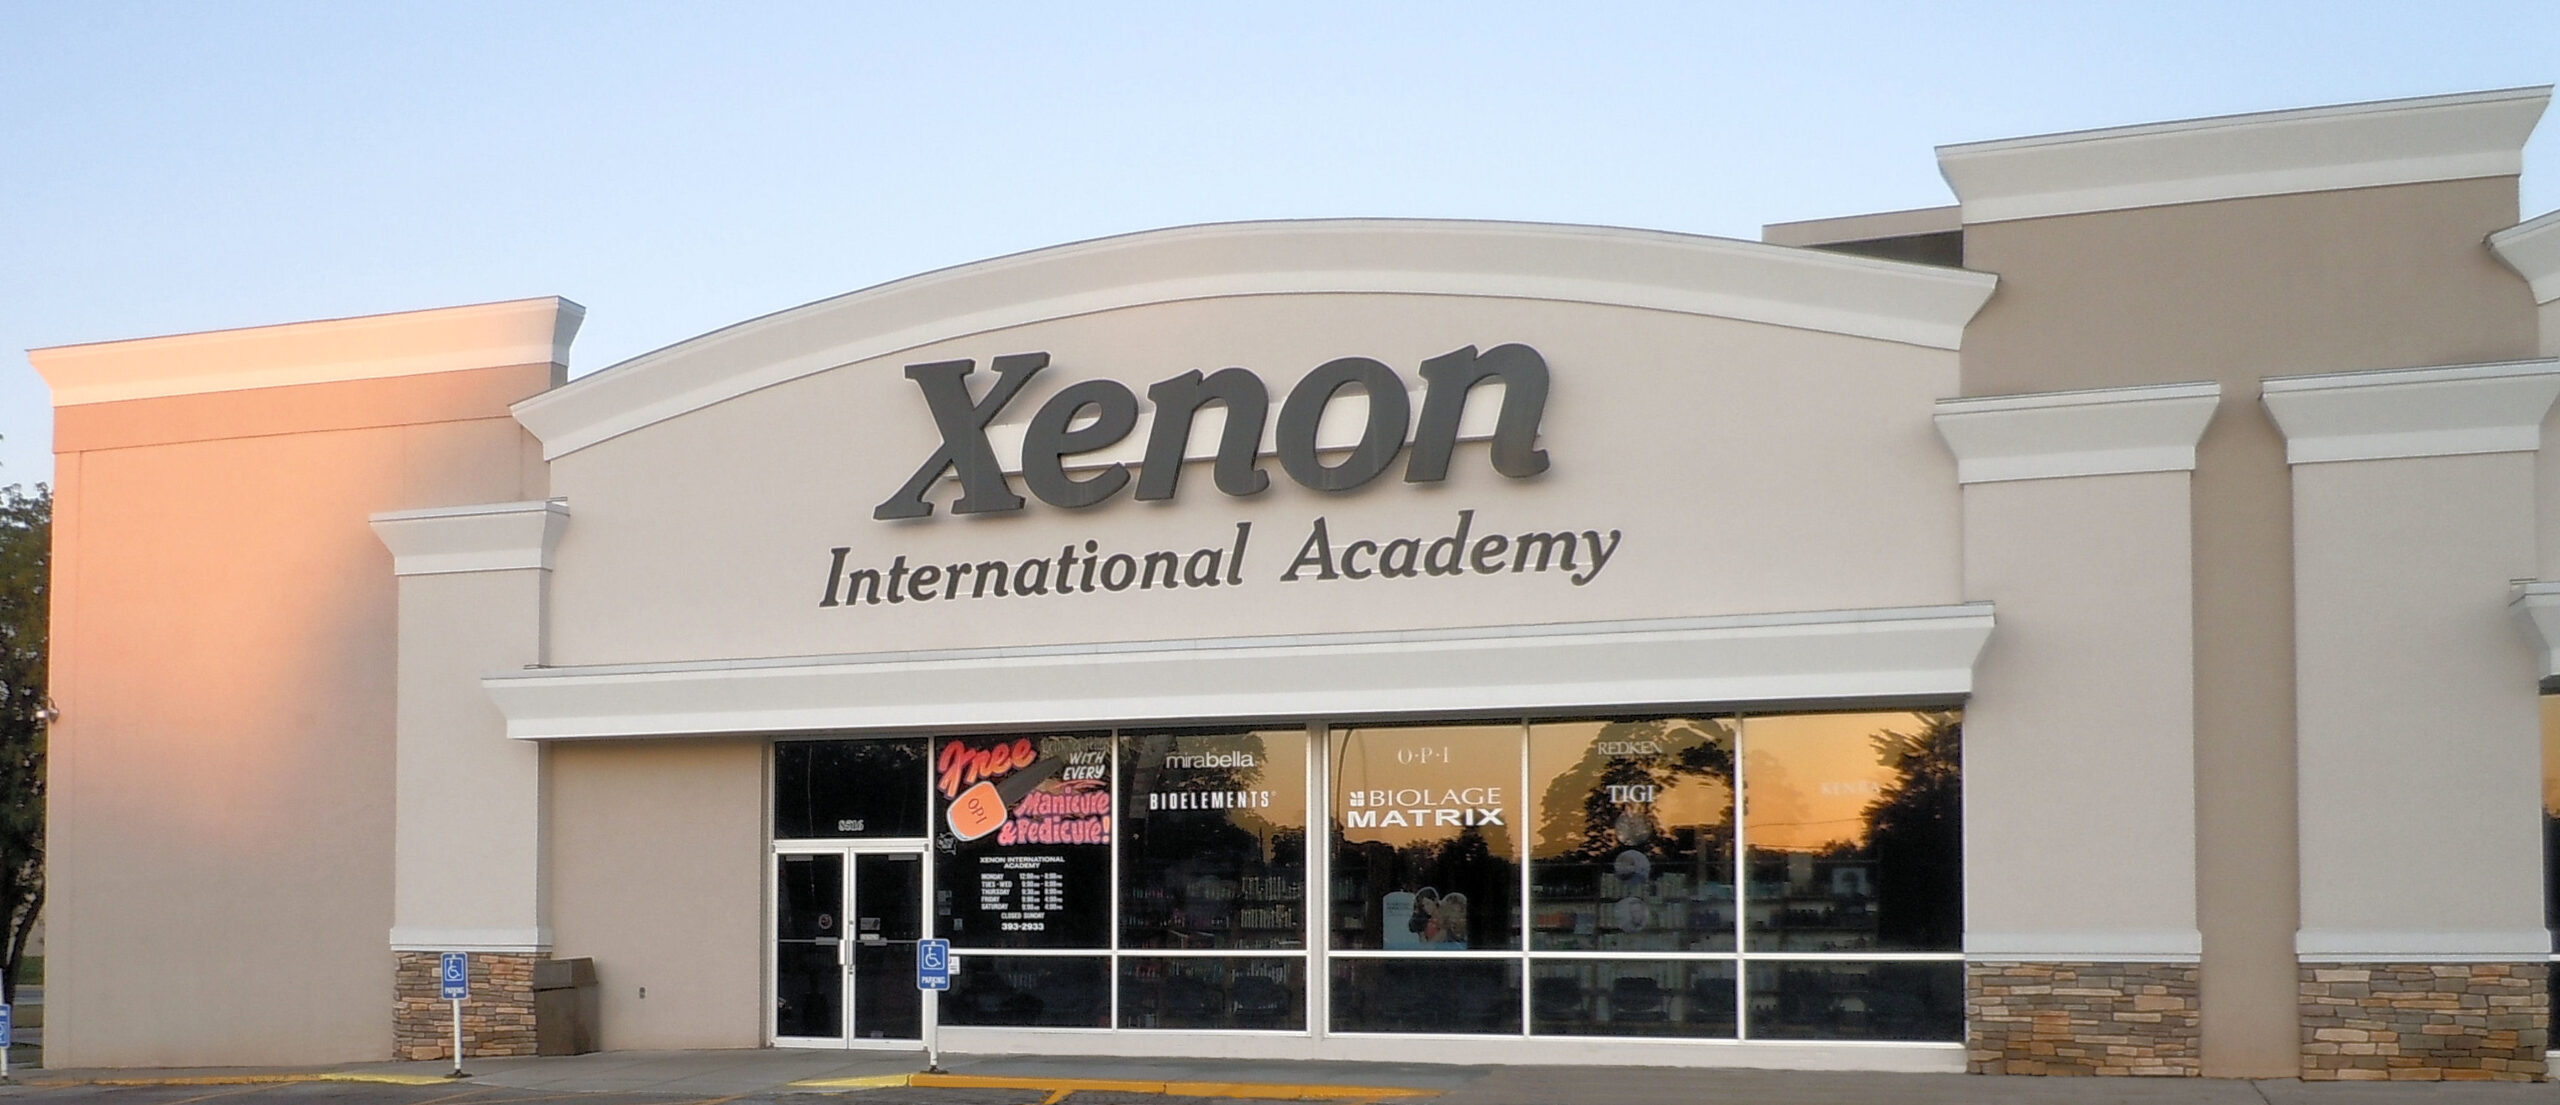 Xenon International Academy